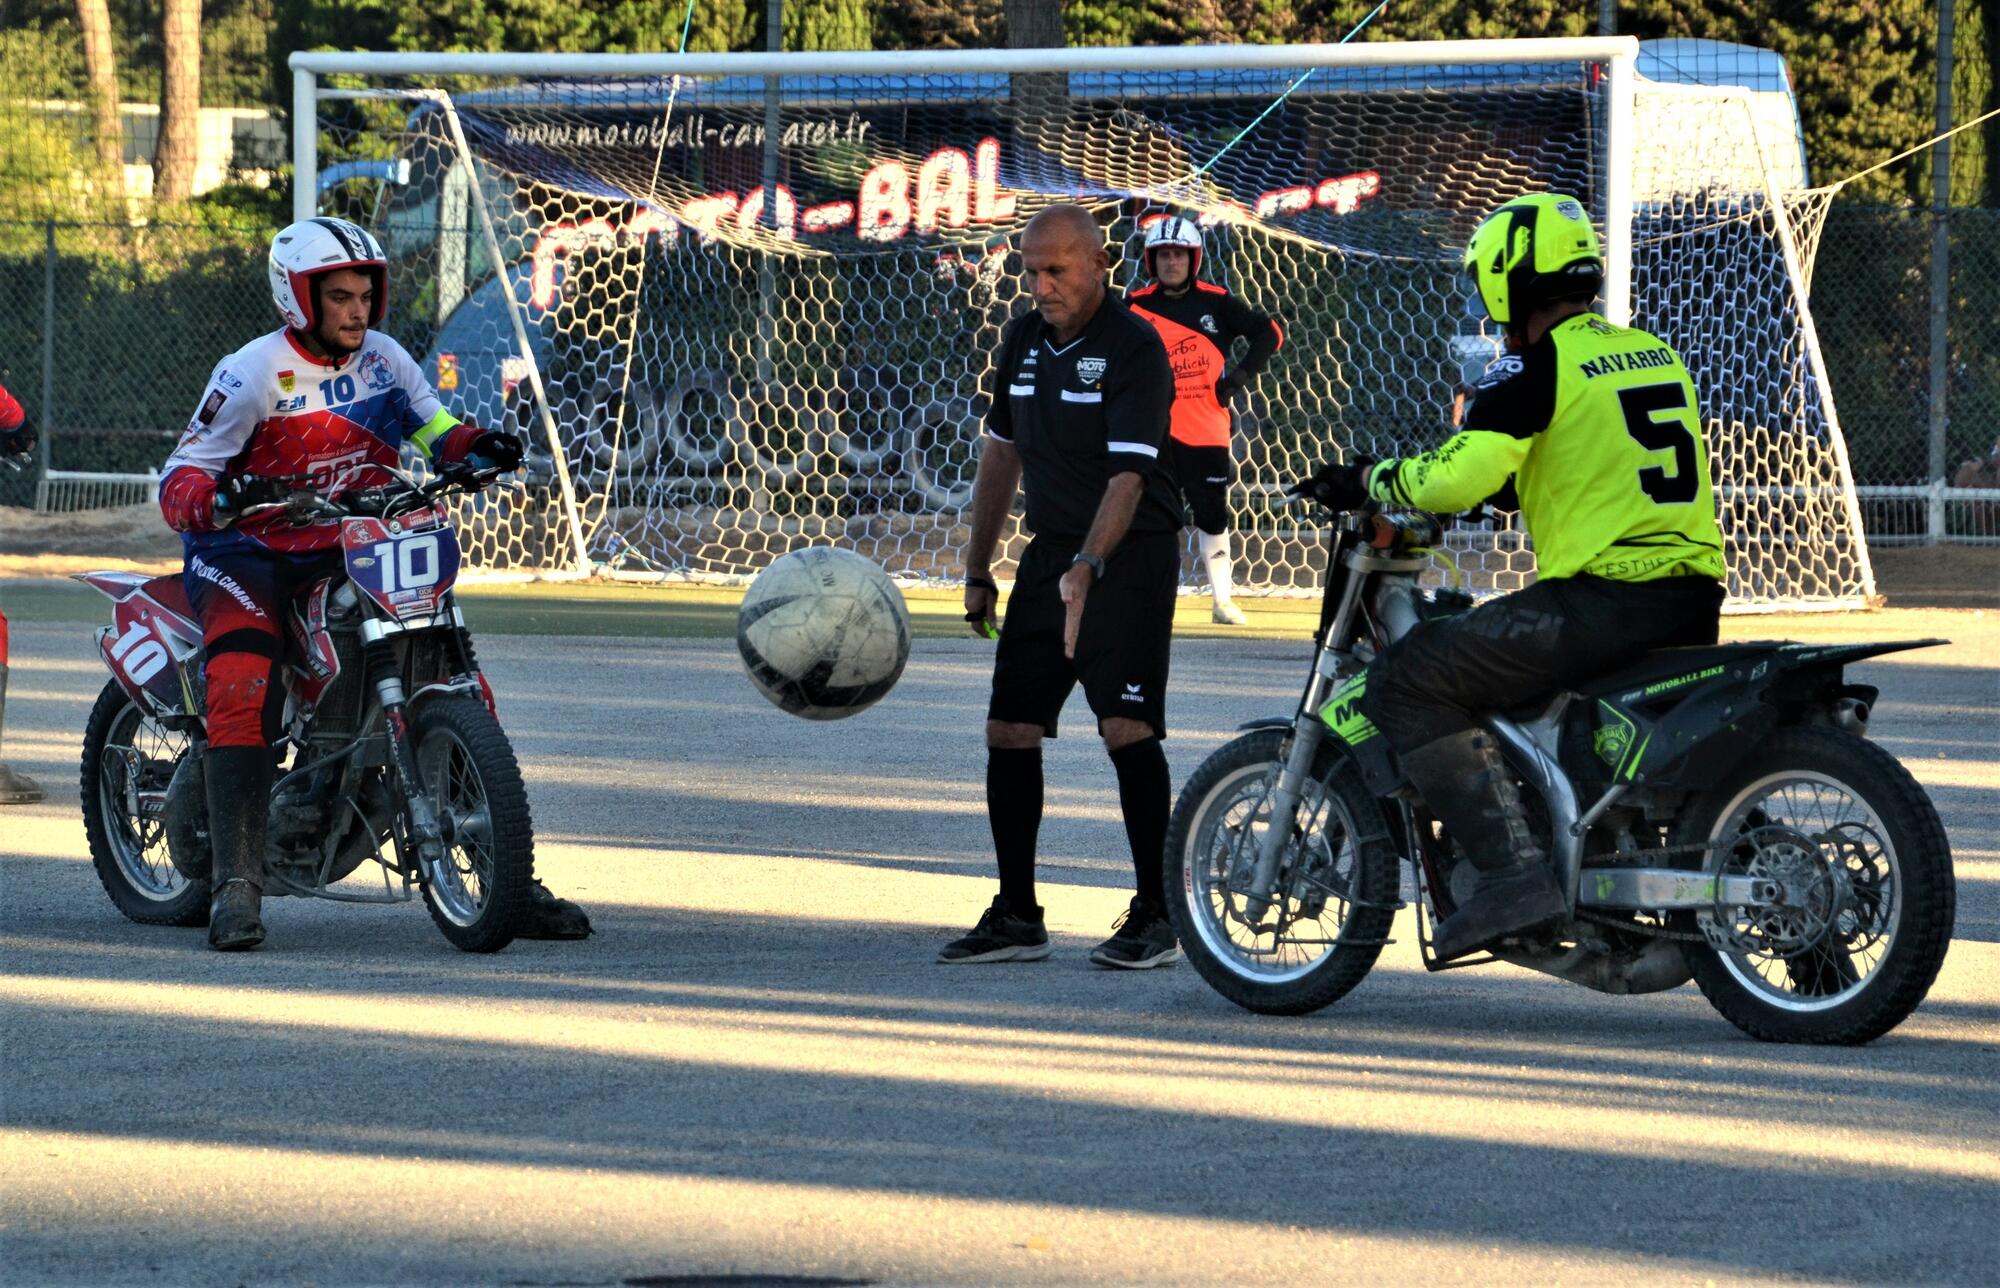 Belle victoire du Moto-Ball Club Camaret 7 buts à 2 face au Sporting club Moto-Ball Monteux ce samedi 10 juin